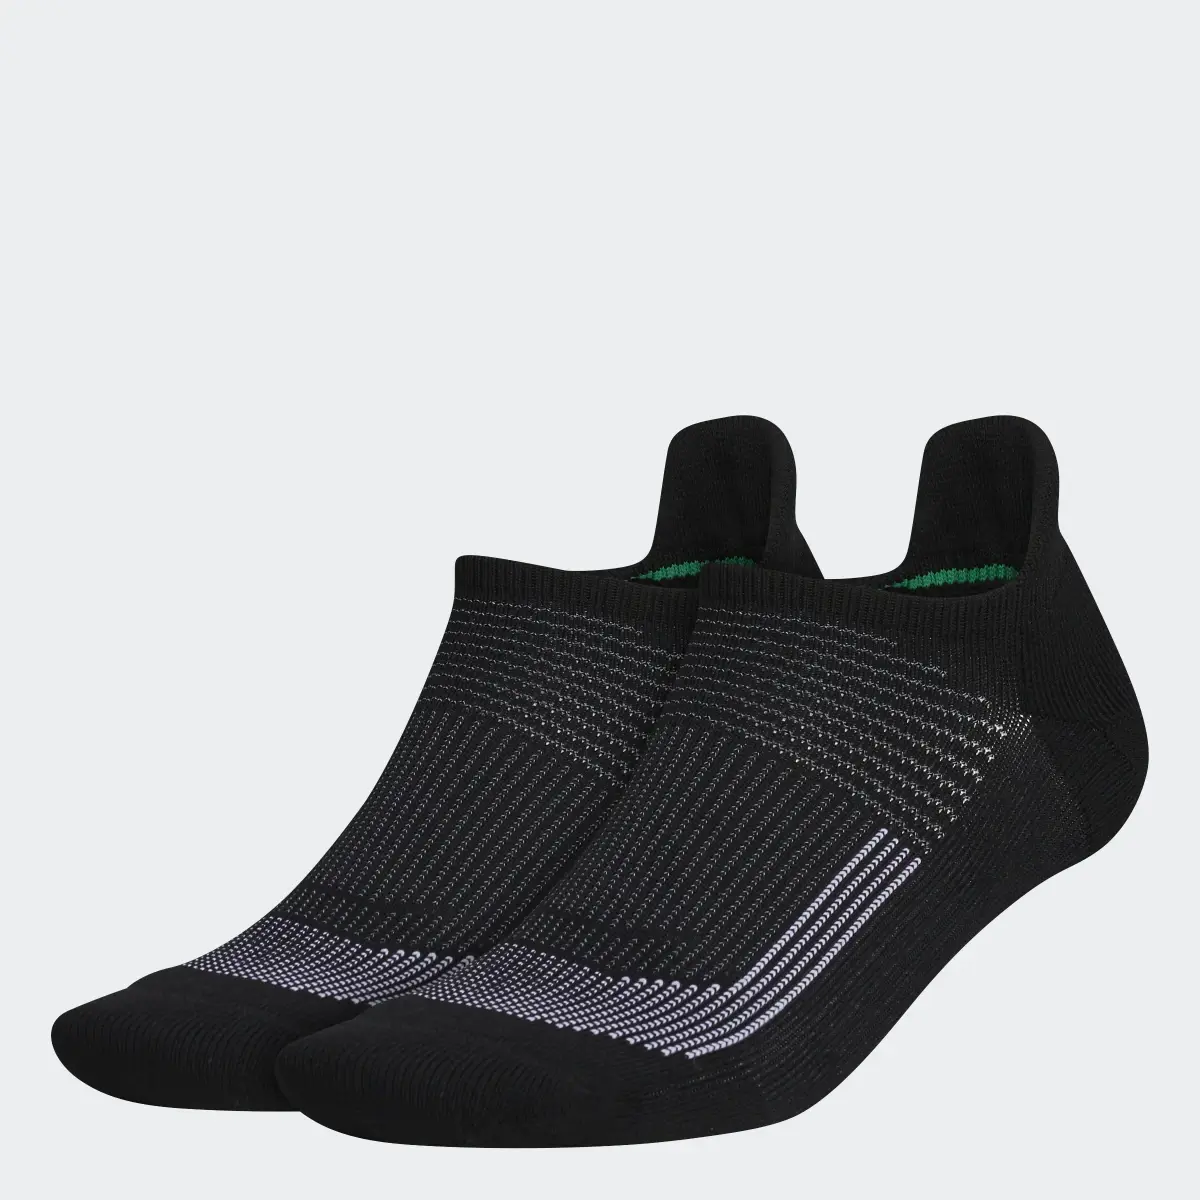 Adidas Superlite Ultraboost Tabbed No-Show Socks 2 Pairs. 1